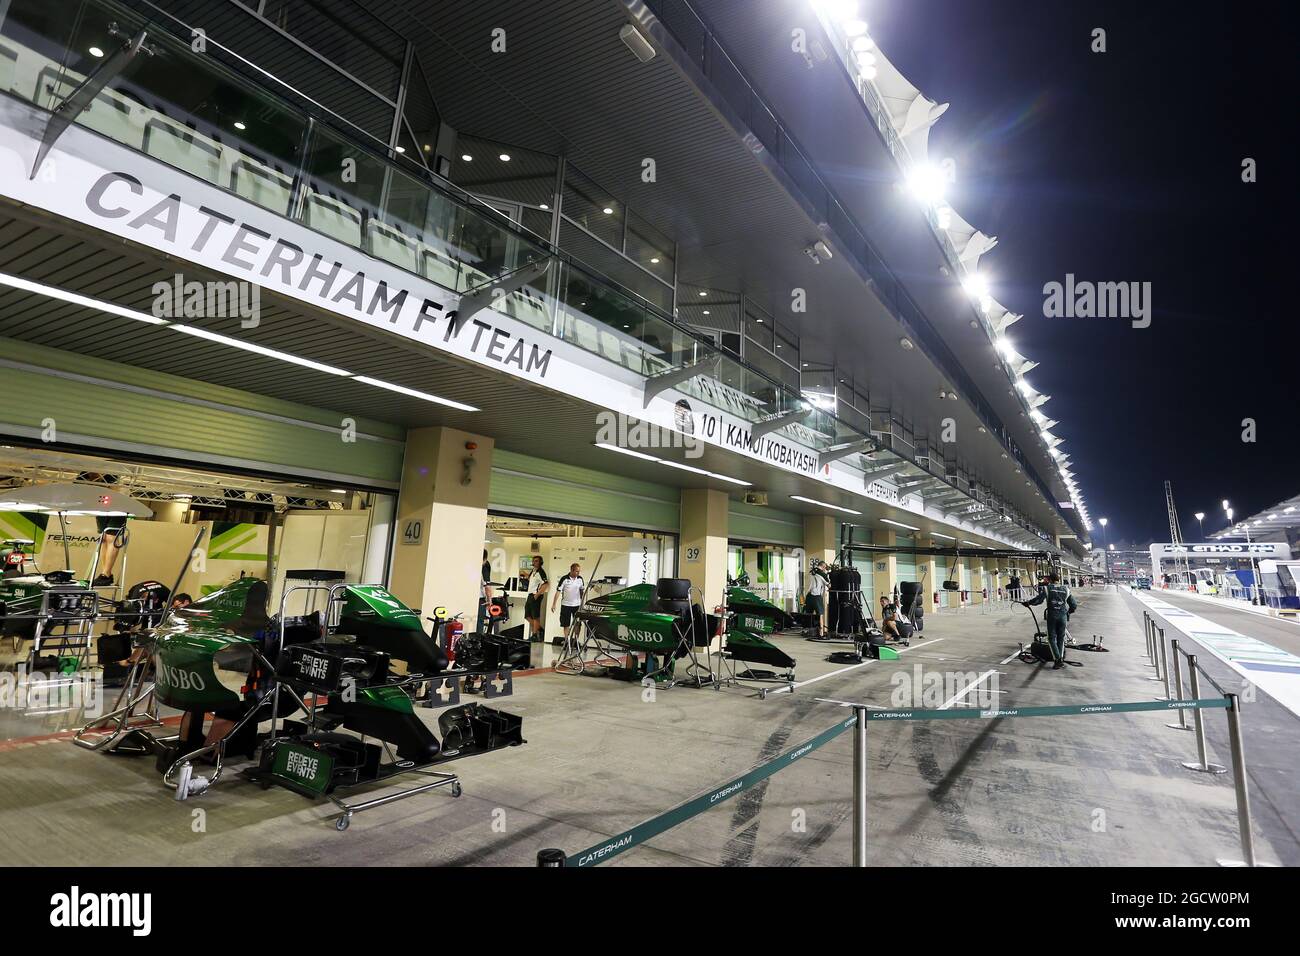 The Caterham F1 Team prepare for the GP in the pits. Abu Dhabi Grand Prix, Thursday 20th November 2014. Yas Marina Circuit, Abu Dhabi, UAE. Stock Photo